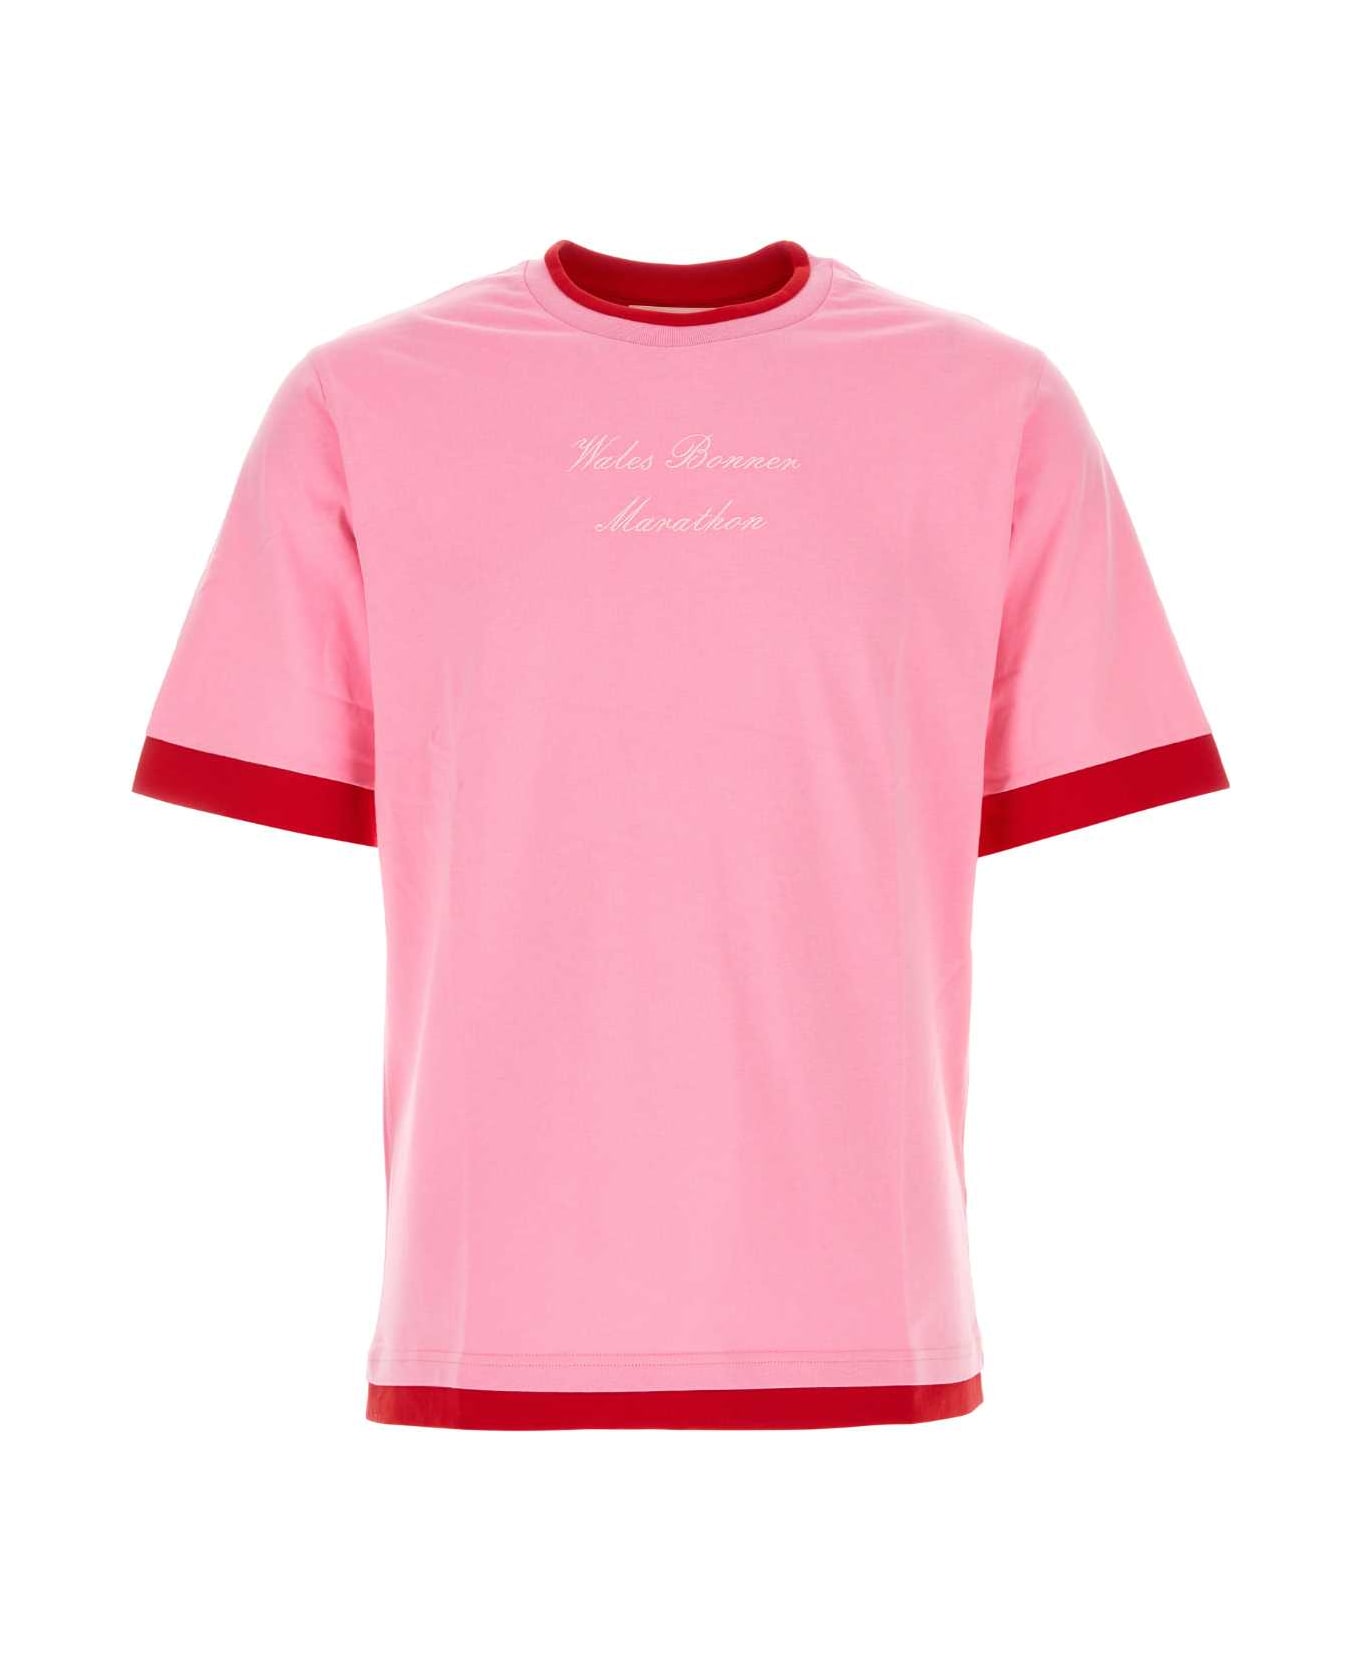 Wales Bonner Pink Cotton Marathon T-shirt - PINKANDRED シャツ